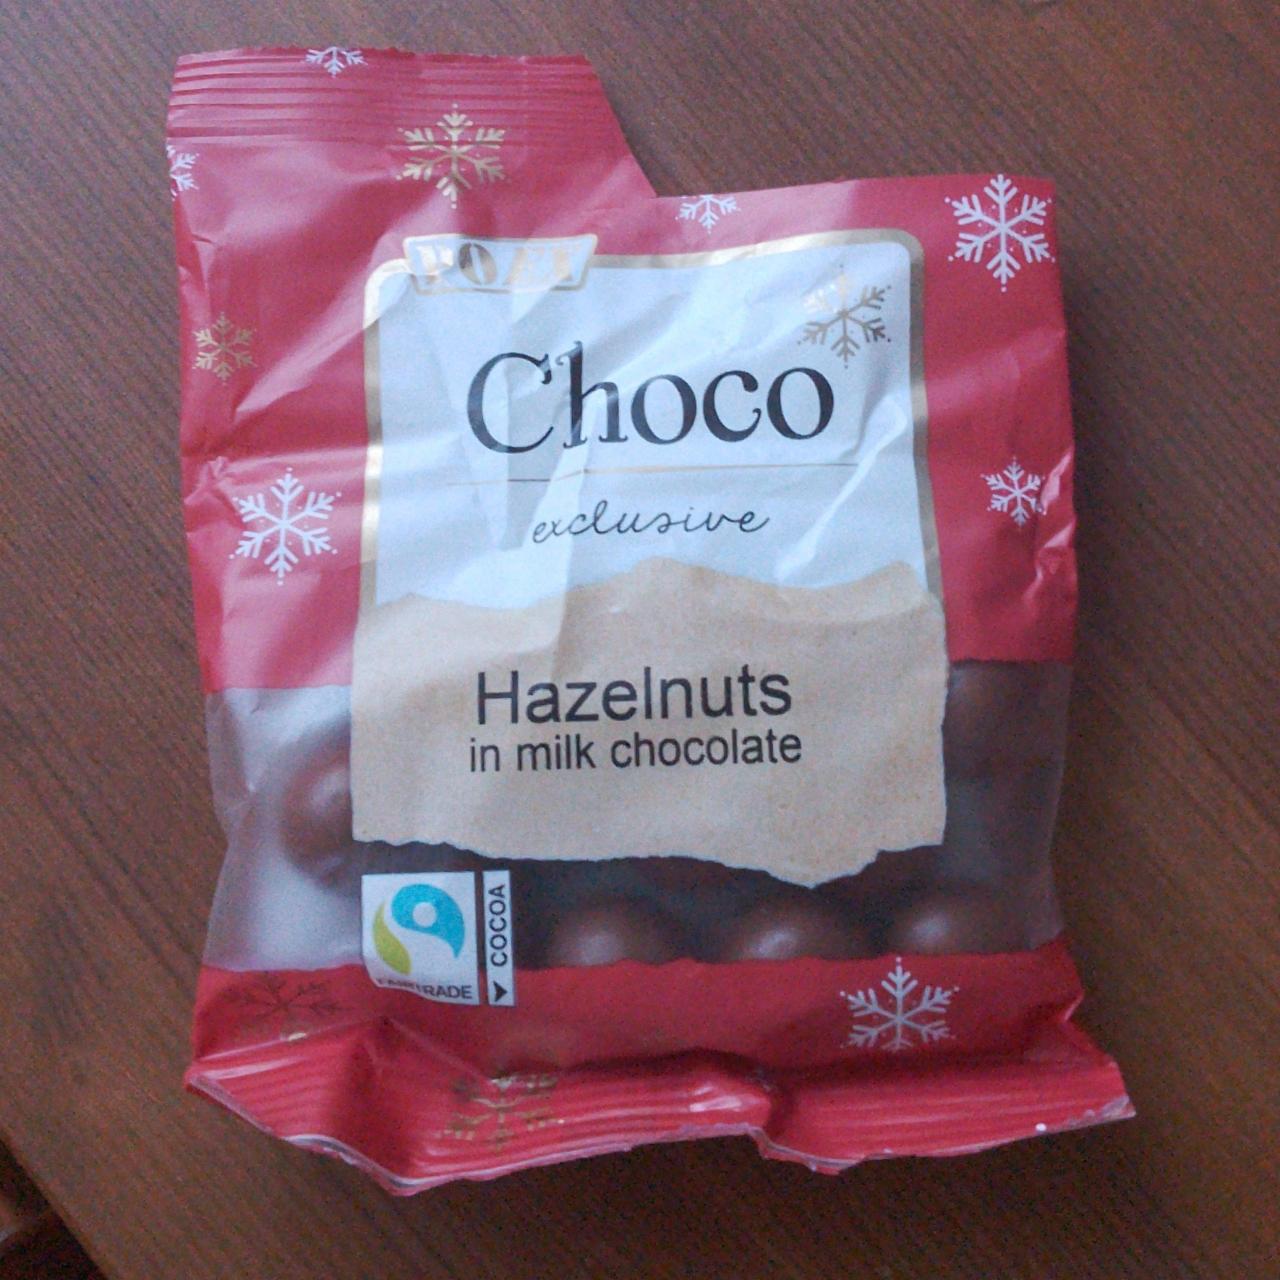 Fotografie - Choco exclusive Hazelnuts in milk chocolate Poex